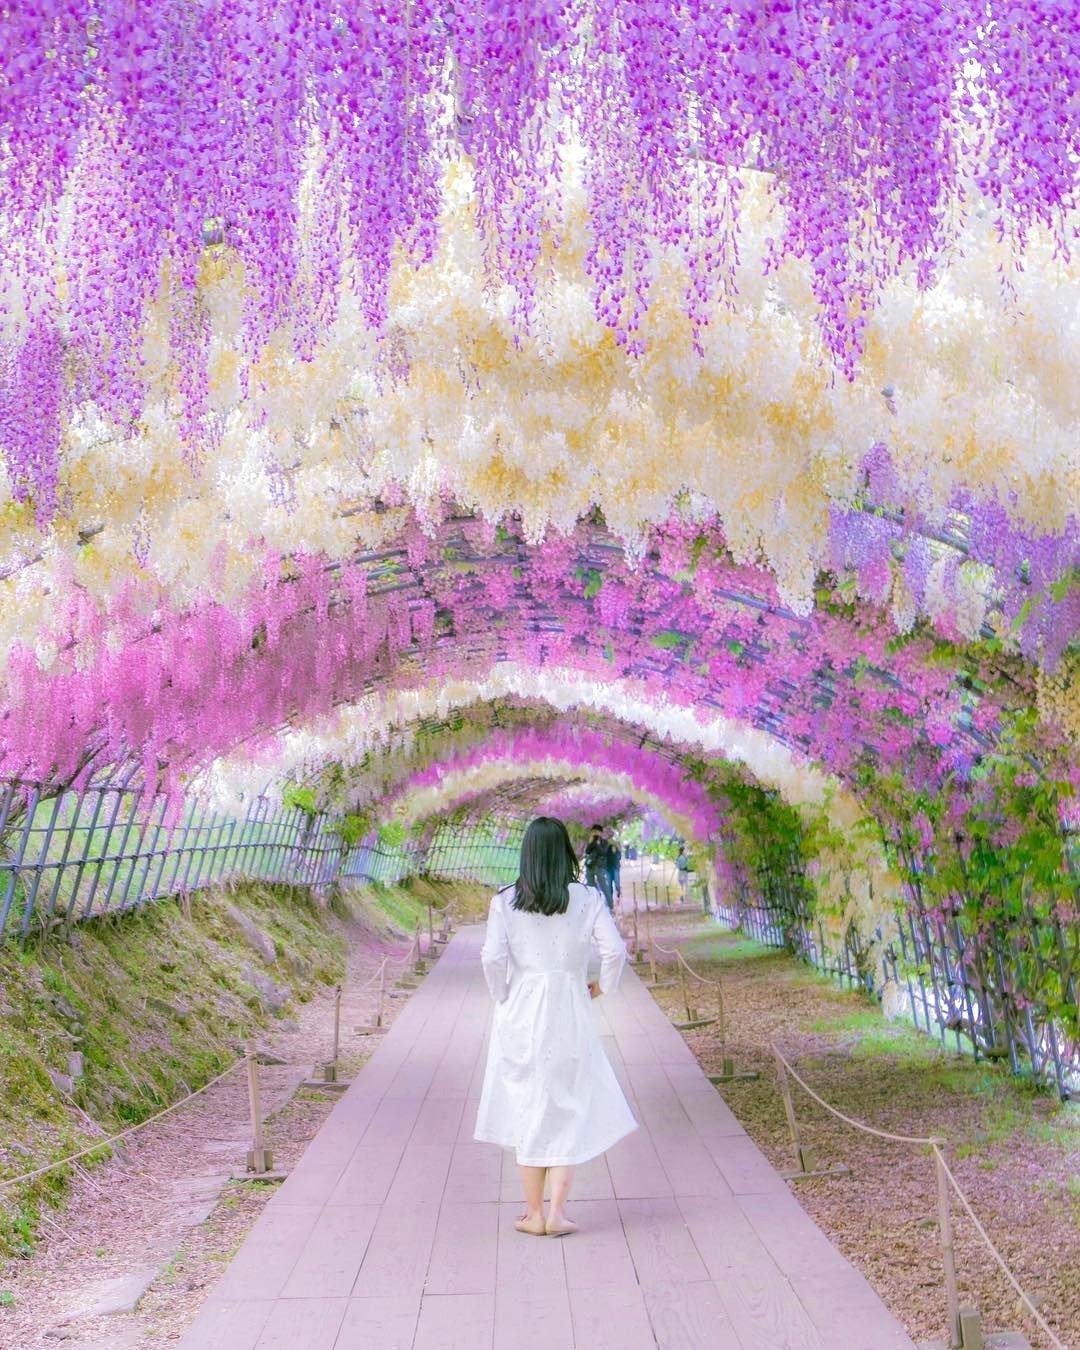 глициния цветет в японии